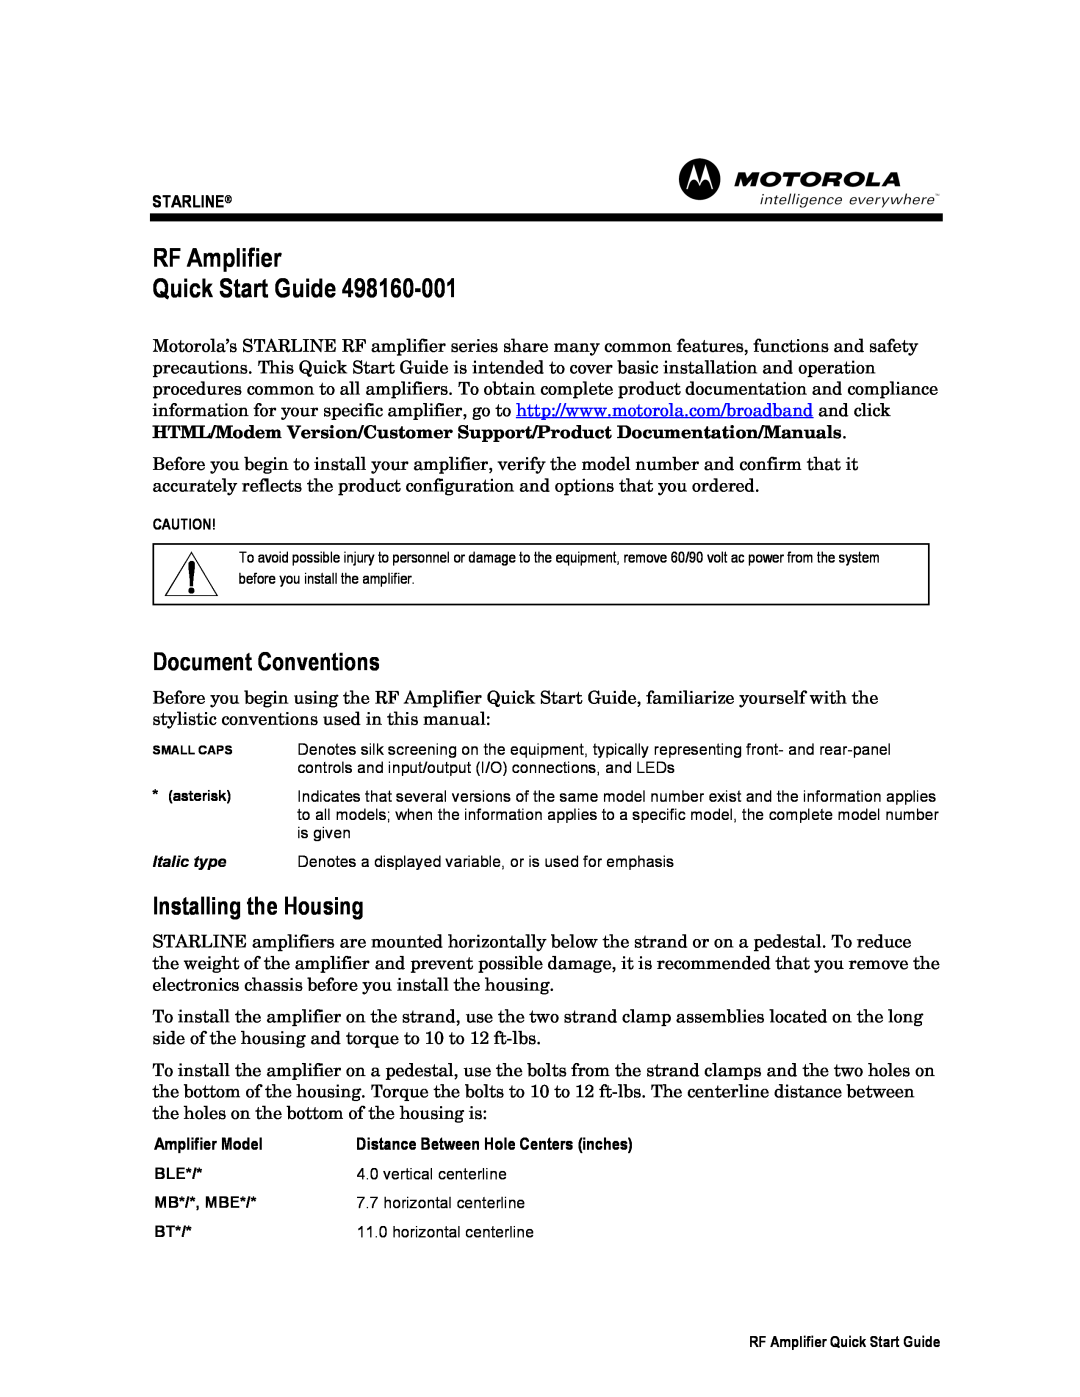 Motorola RF Amplifier quick start Document Conventions, Installing the Housing, Starline, Amplifier Model 